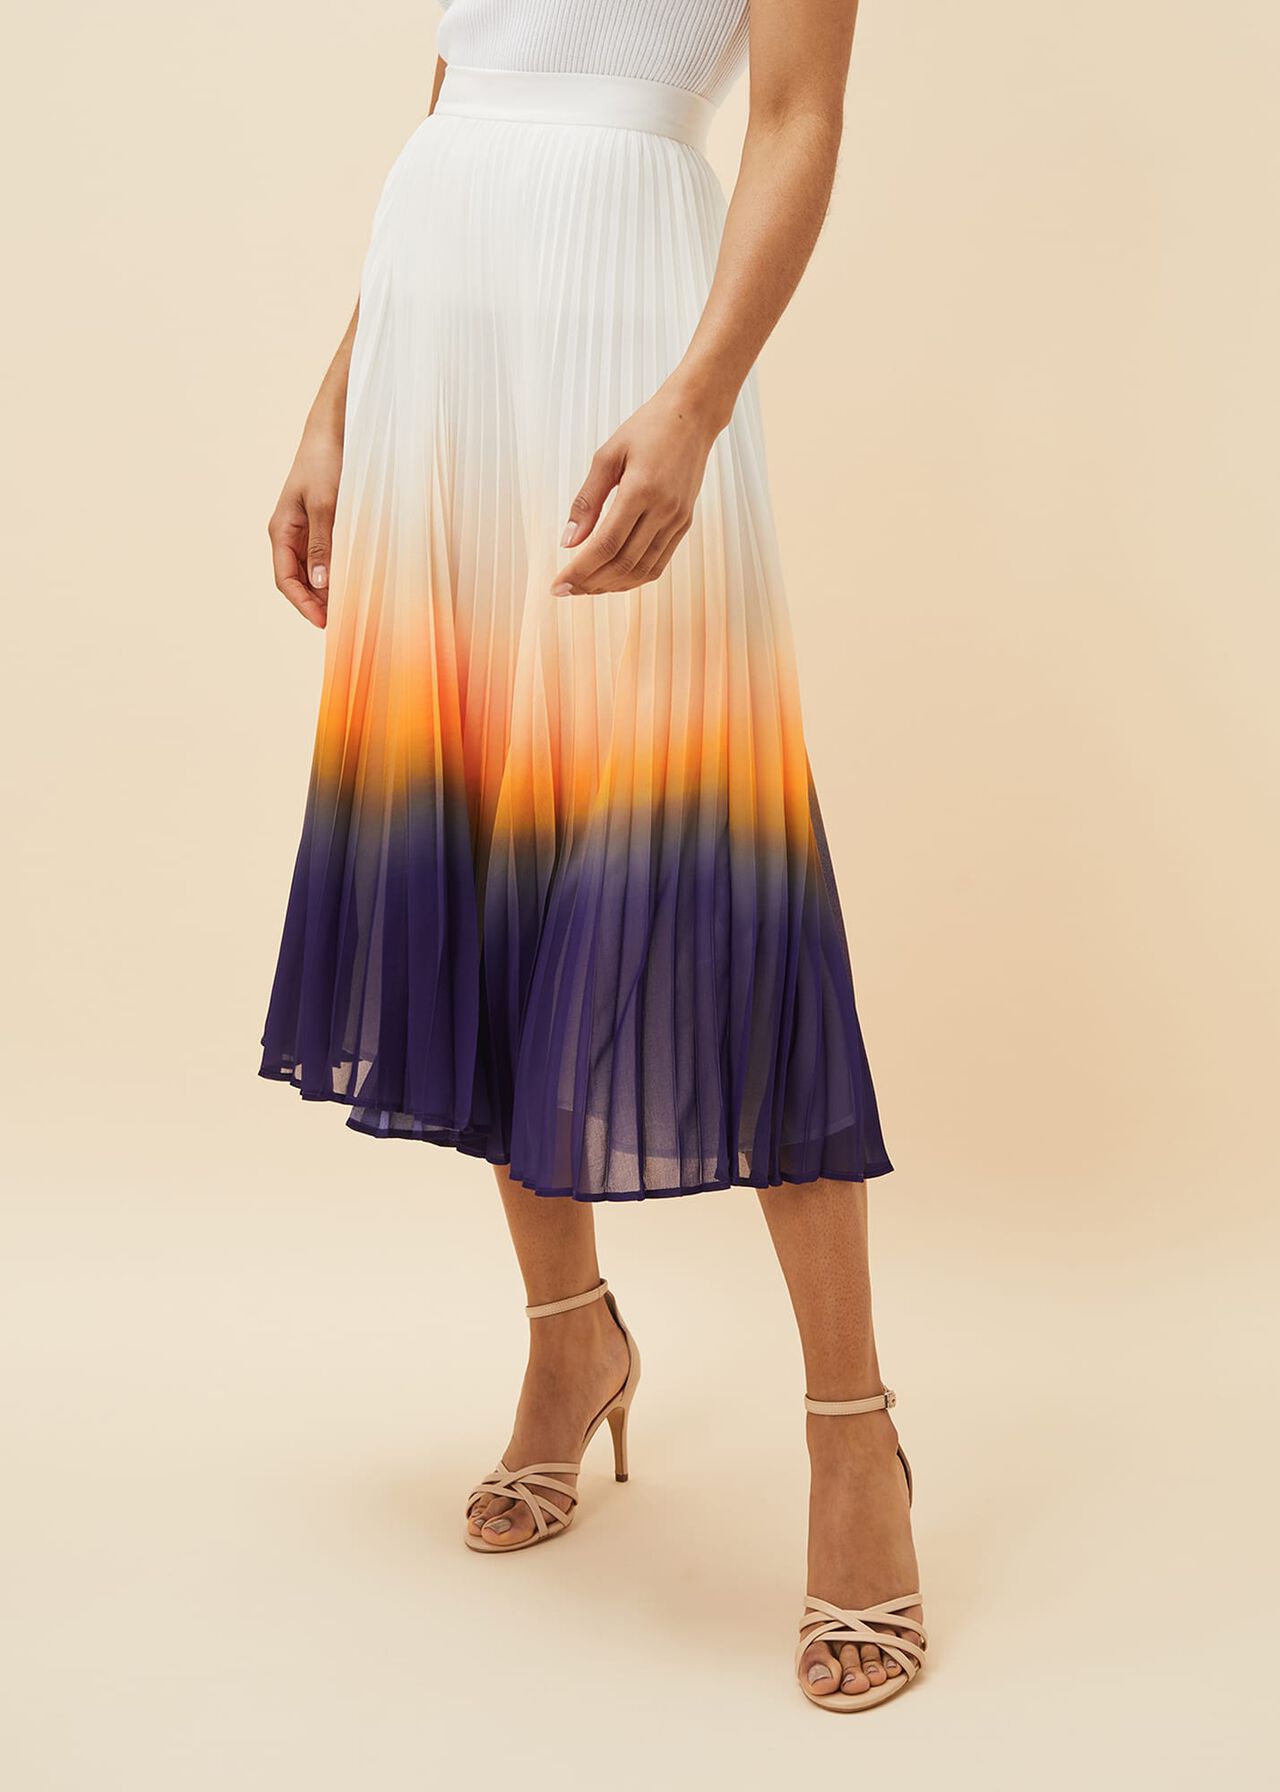 Raya Pleated Dip Dye Skirt